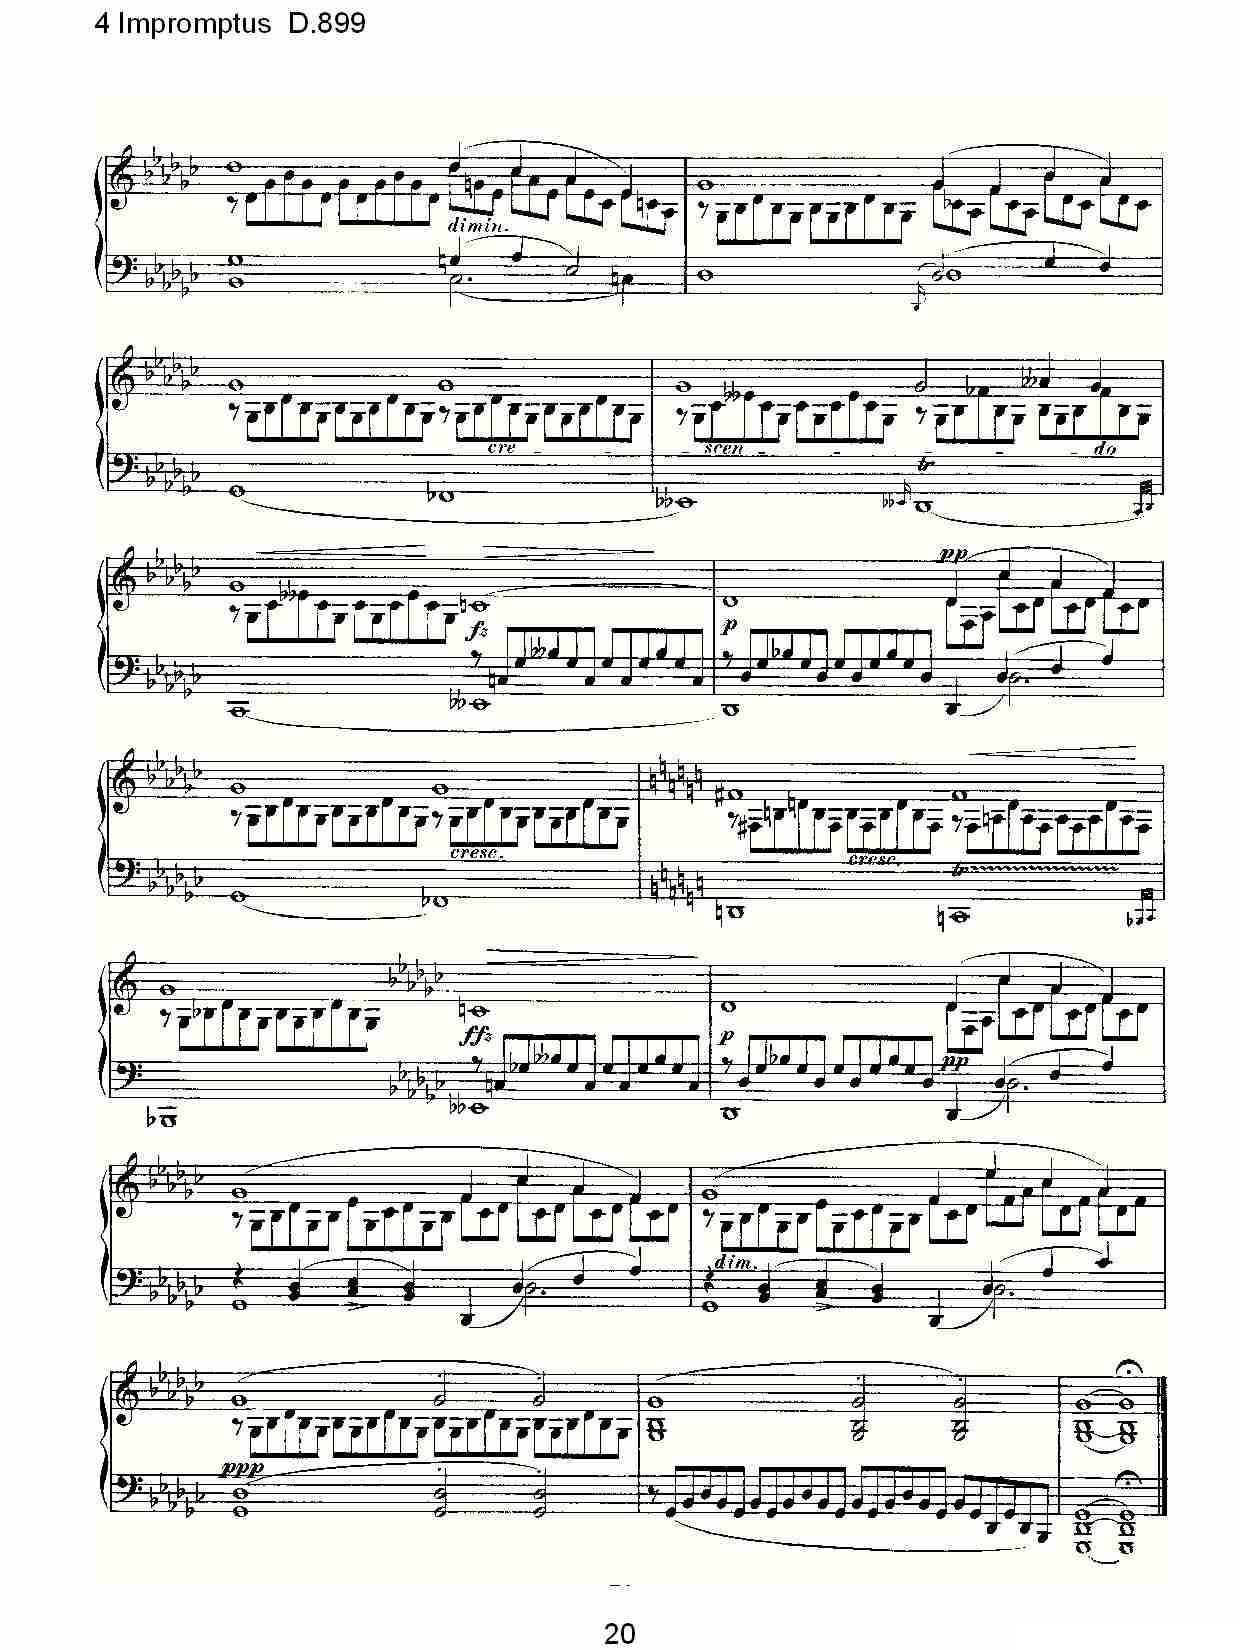 4 Impromptus D.899（4人即兴演奏 D.899）钢琴曲谱（图20）